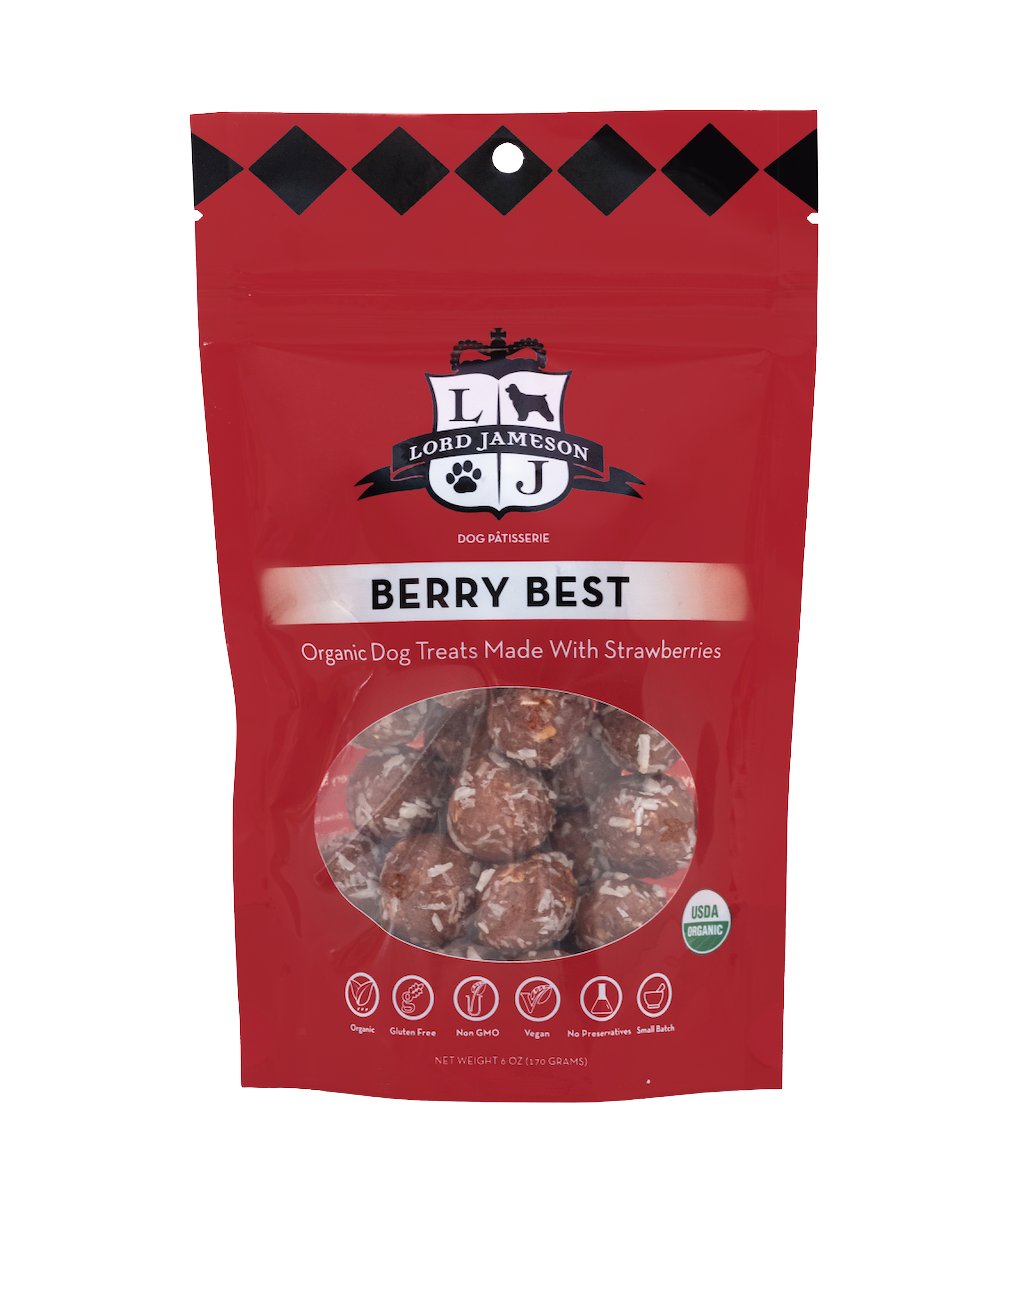 Lord Jameson Organic Dog Treats Berry Best - Strawberries, Beets + Coconut 6oz Bag